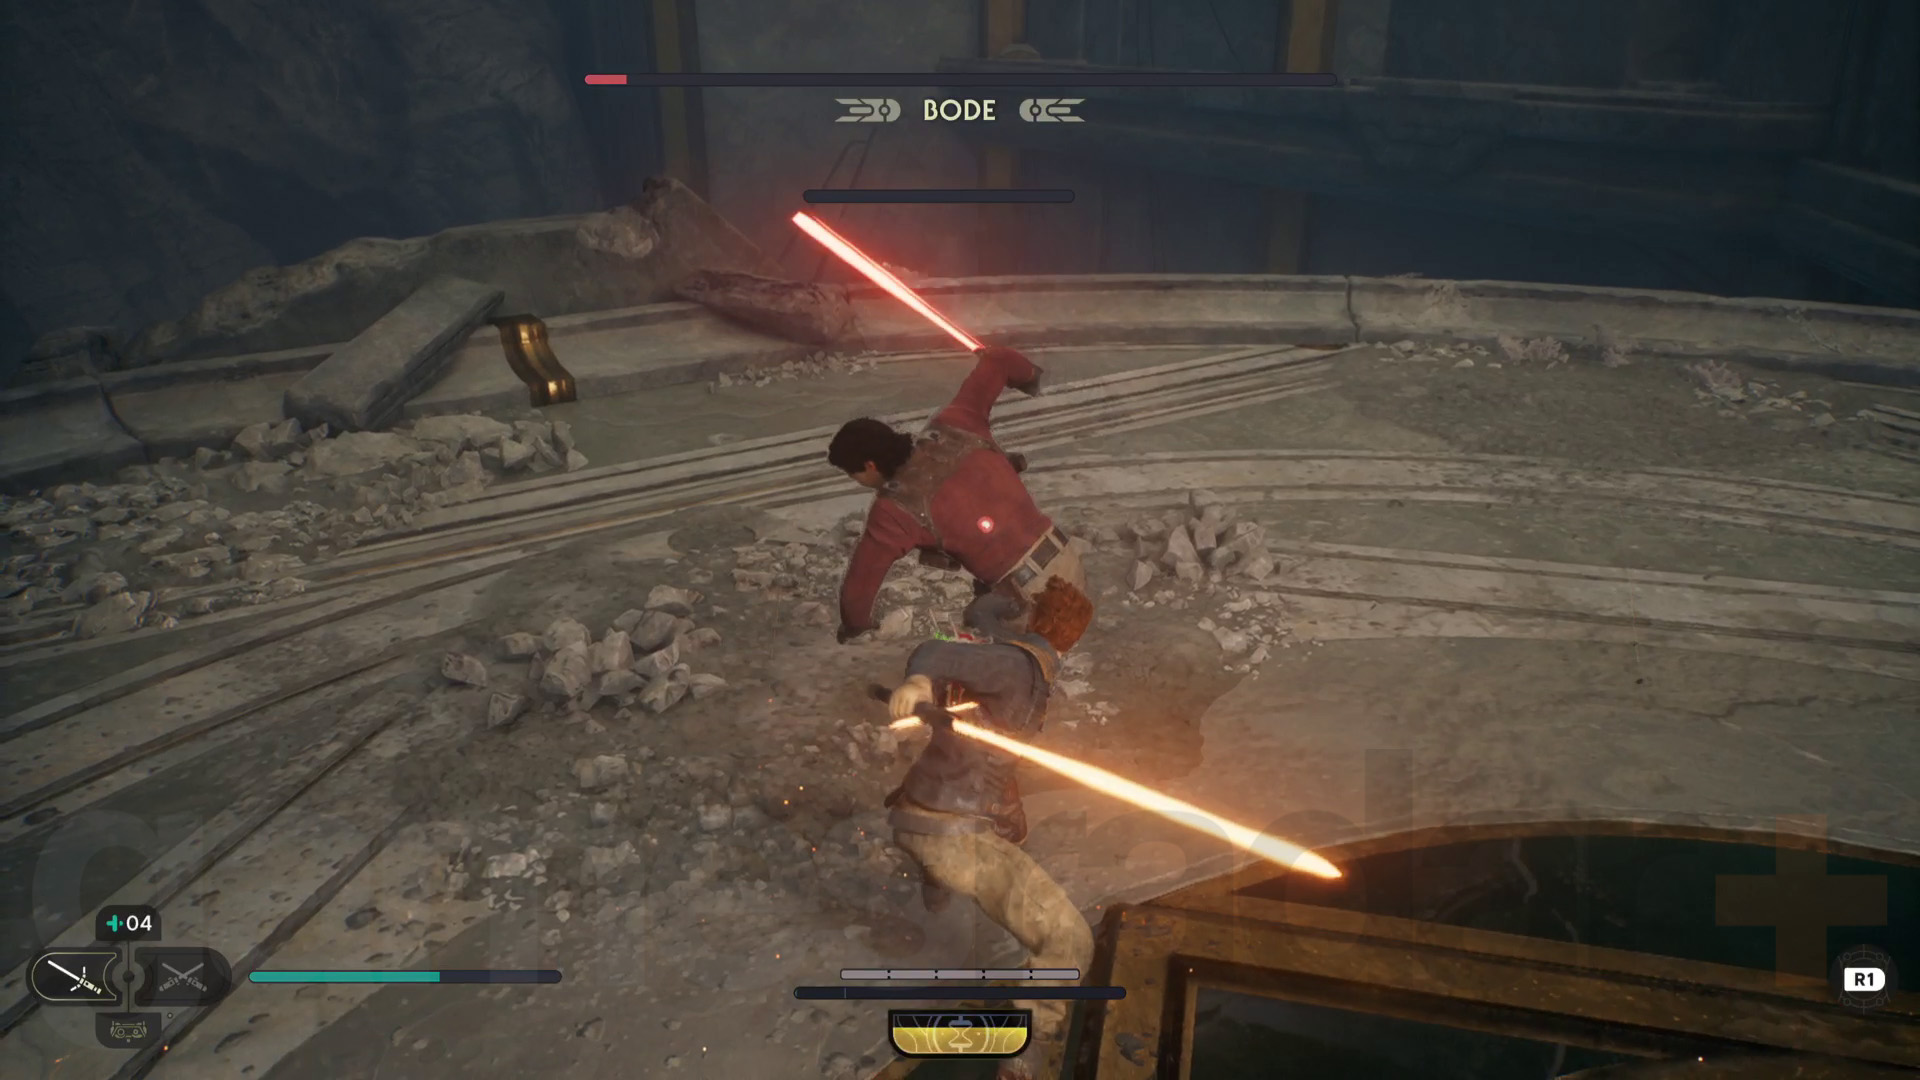 Star Wars Jedi Survivor Tanalorr walkthrough Кэл и Боде достают свои световые мечи для боя